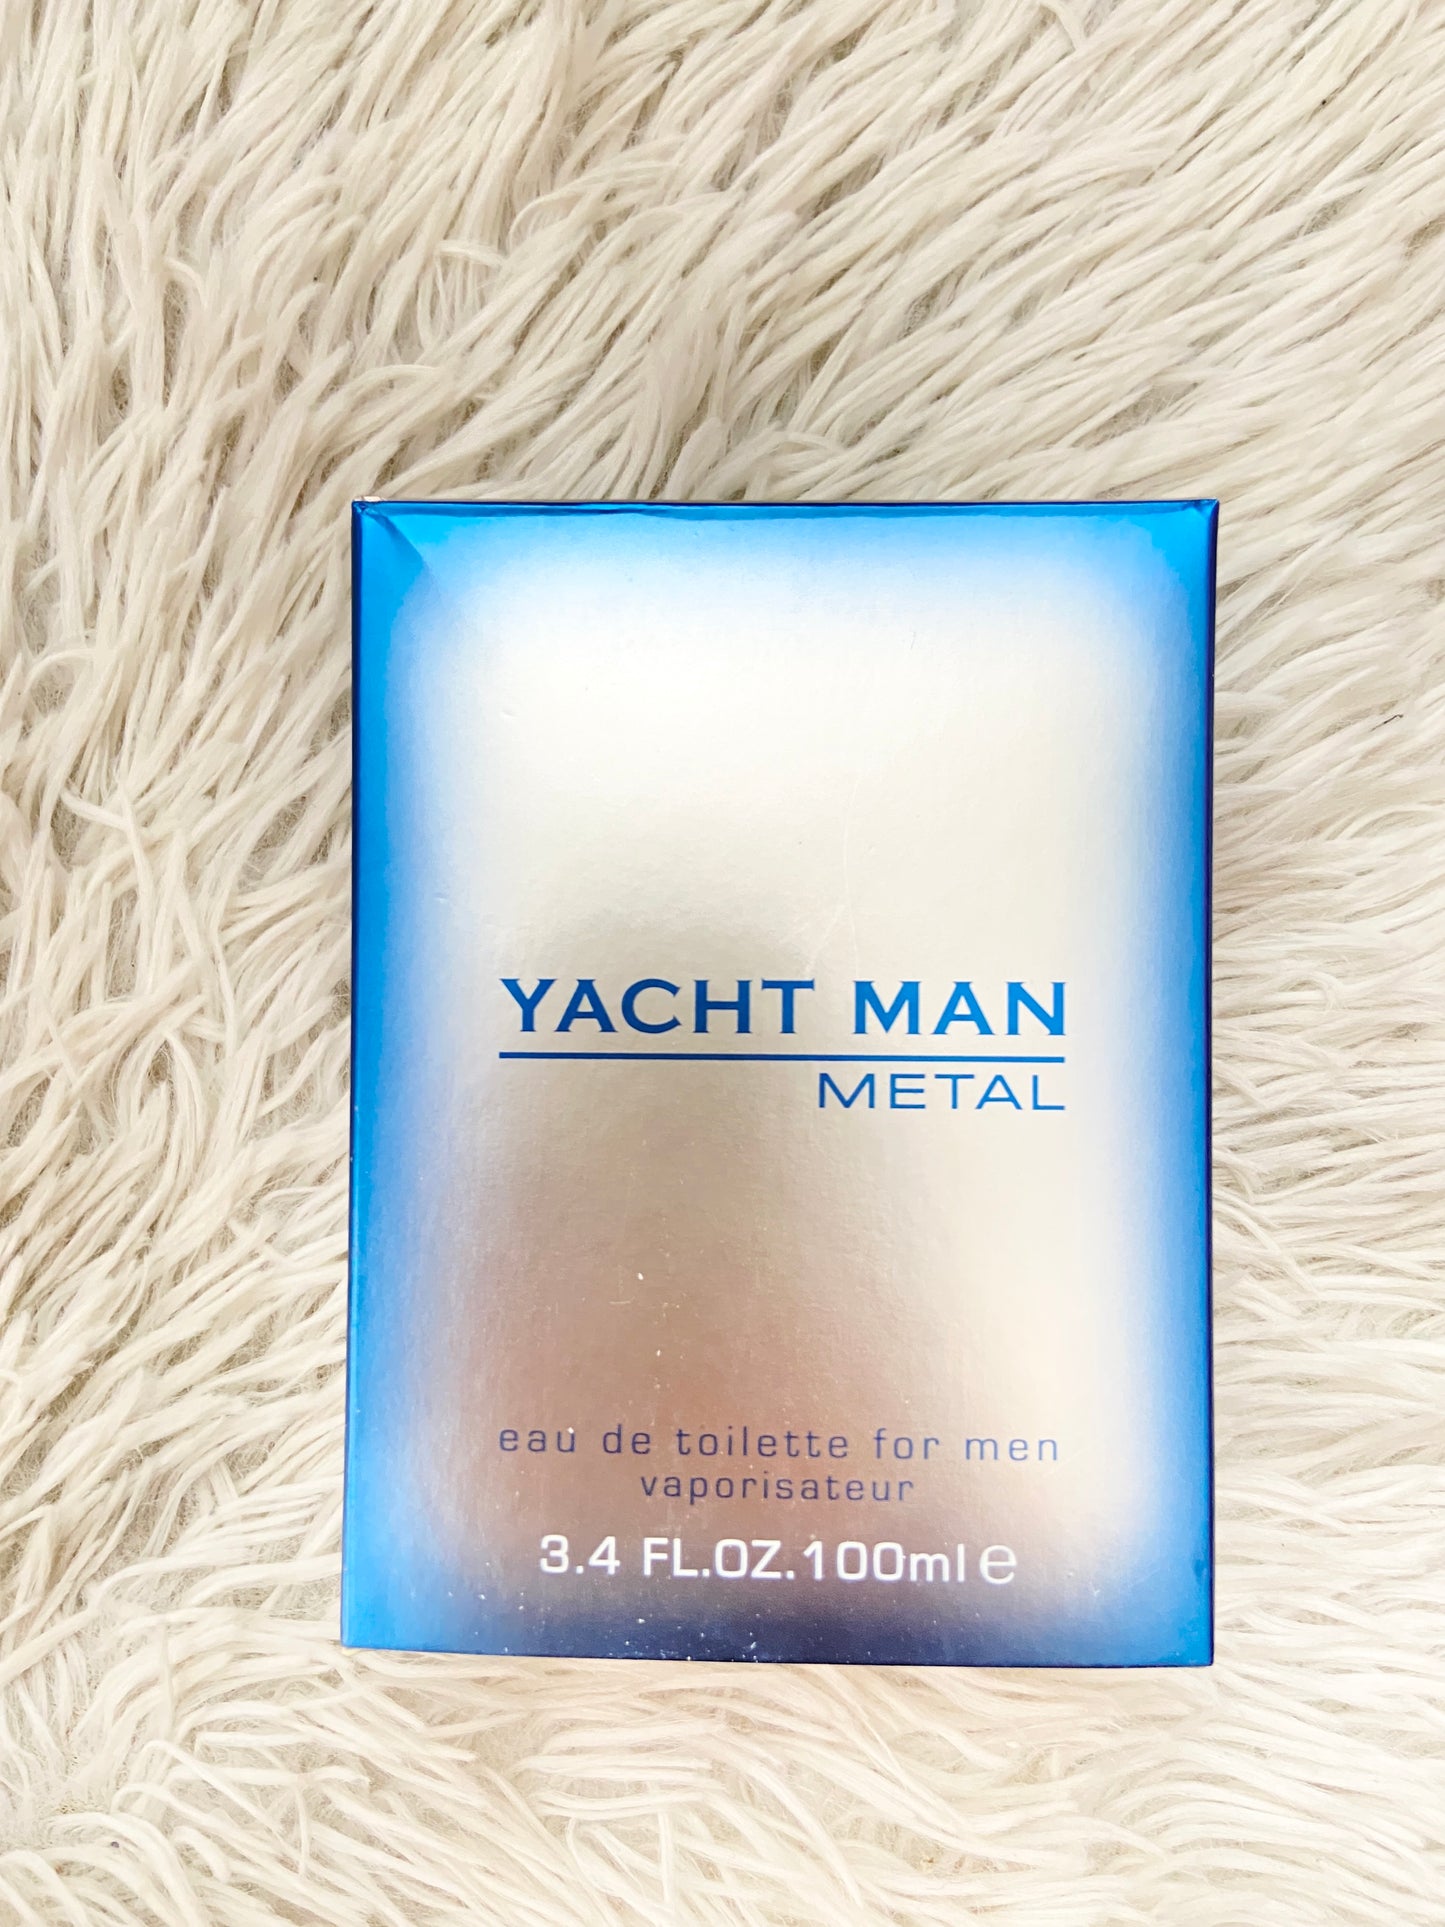 Perfume YACHT MAN  METAL original plateado con azul.